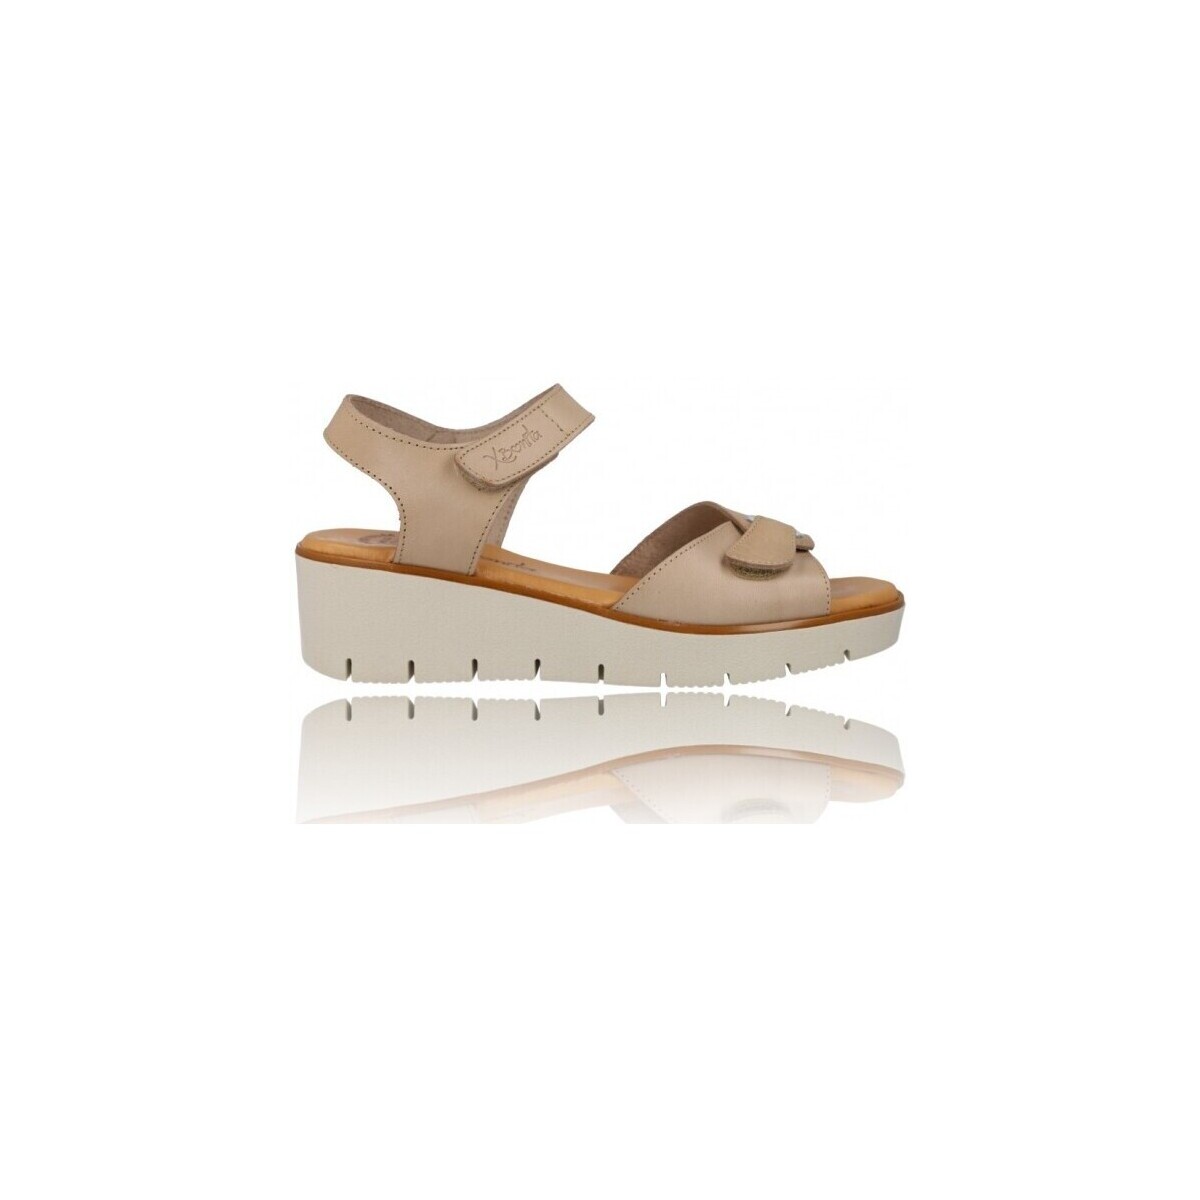 Schuhe Damen Sandalen / Sandaletten Calzados Vesga Sandalias con Cuña para Mujer de  XBonita 9963 Multicolor